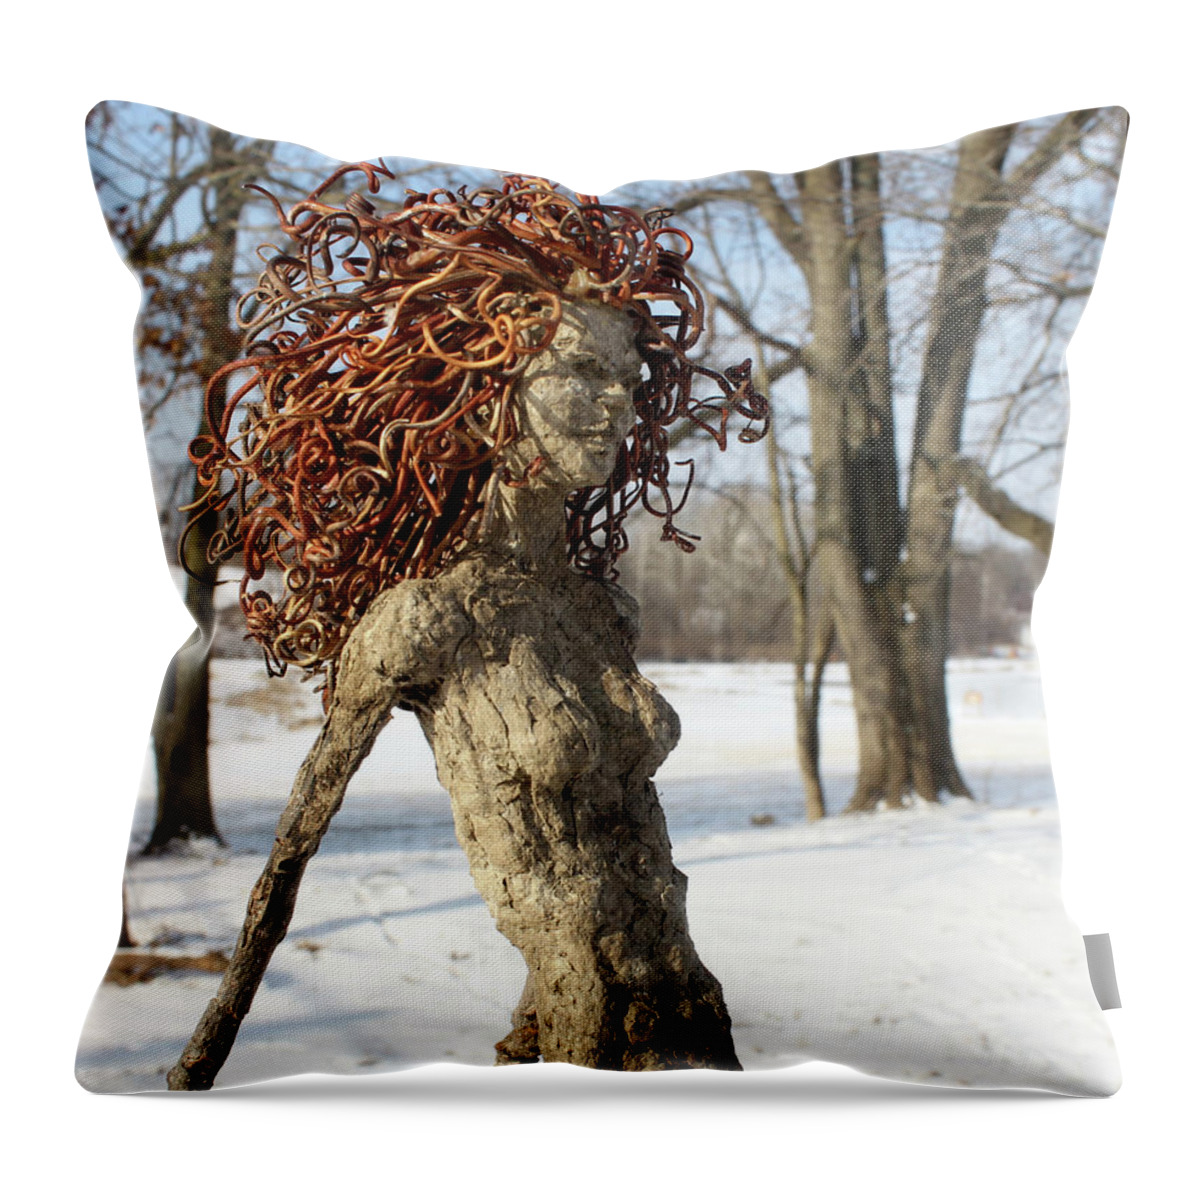 Adam Long Sculpture Throw Pillow featuring the sculpture Forest Figure in the snow by Adam Long